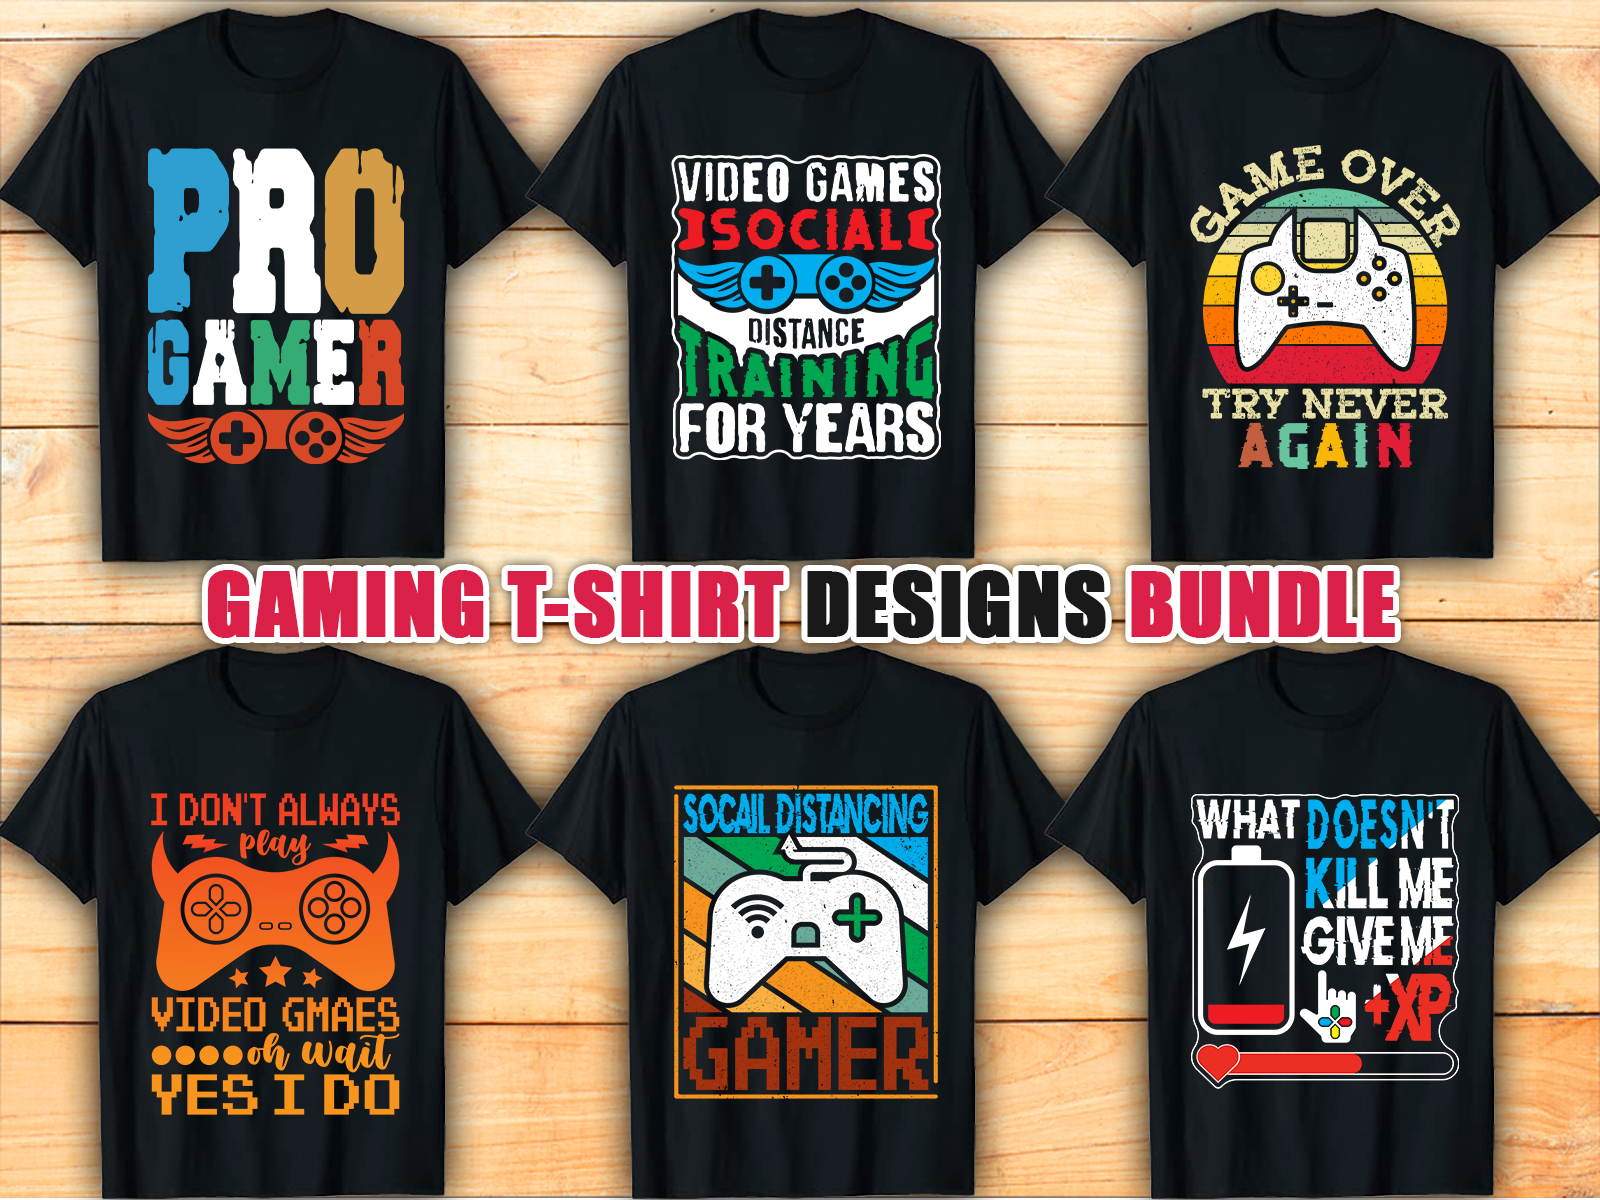 Gaming T-shirt Design Bundle by Jony Ahmed on Dribbble